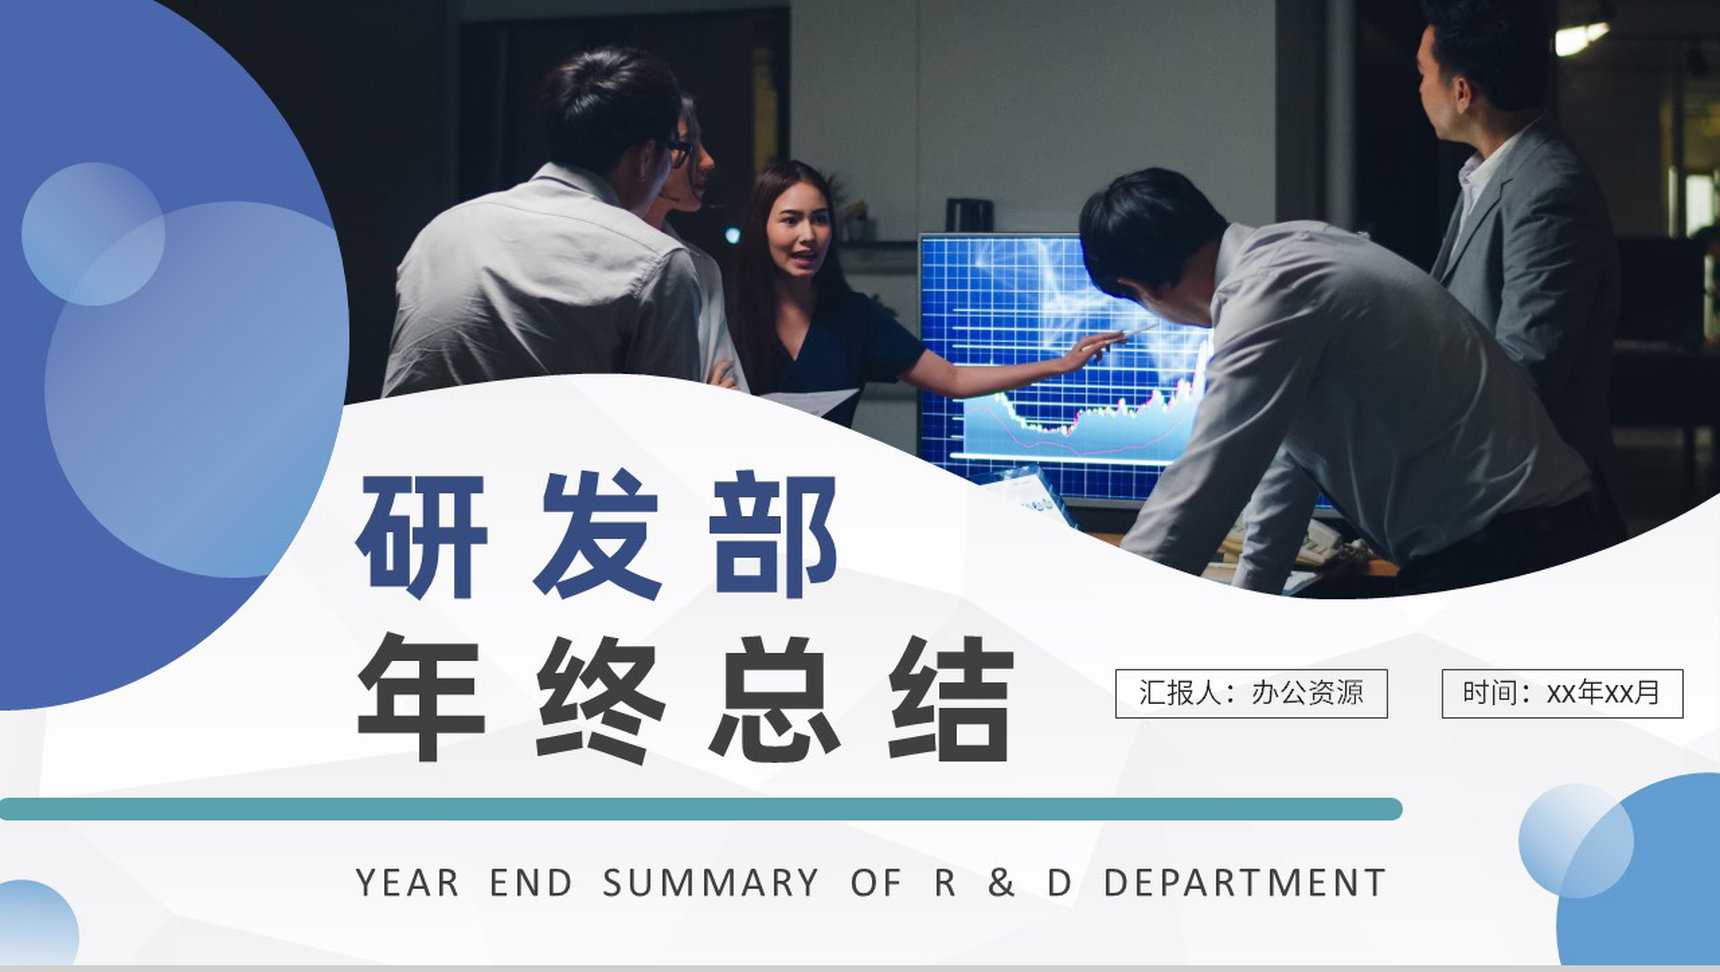 20XX福田工商服务中心工作总结暨新年计划PPT模板